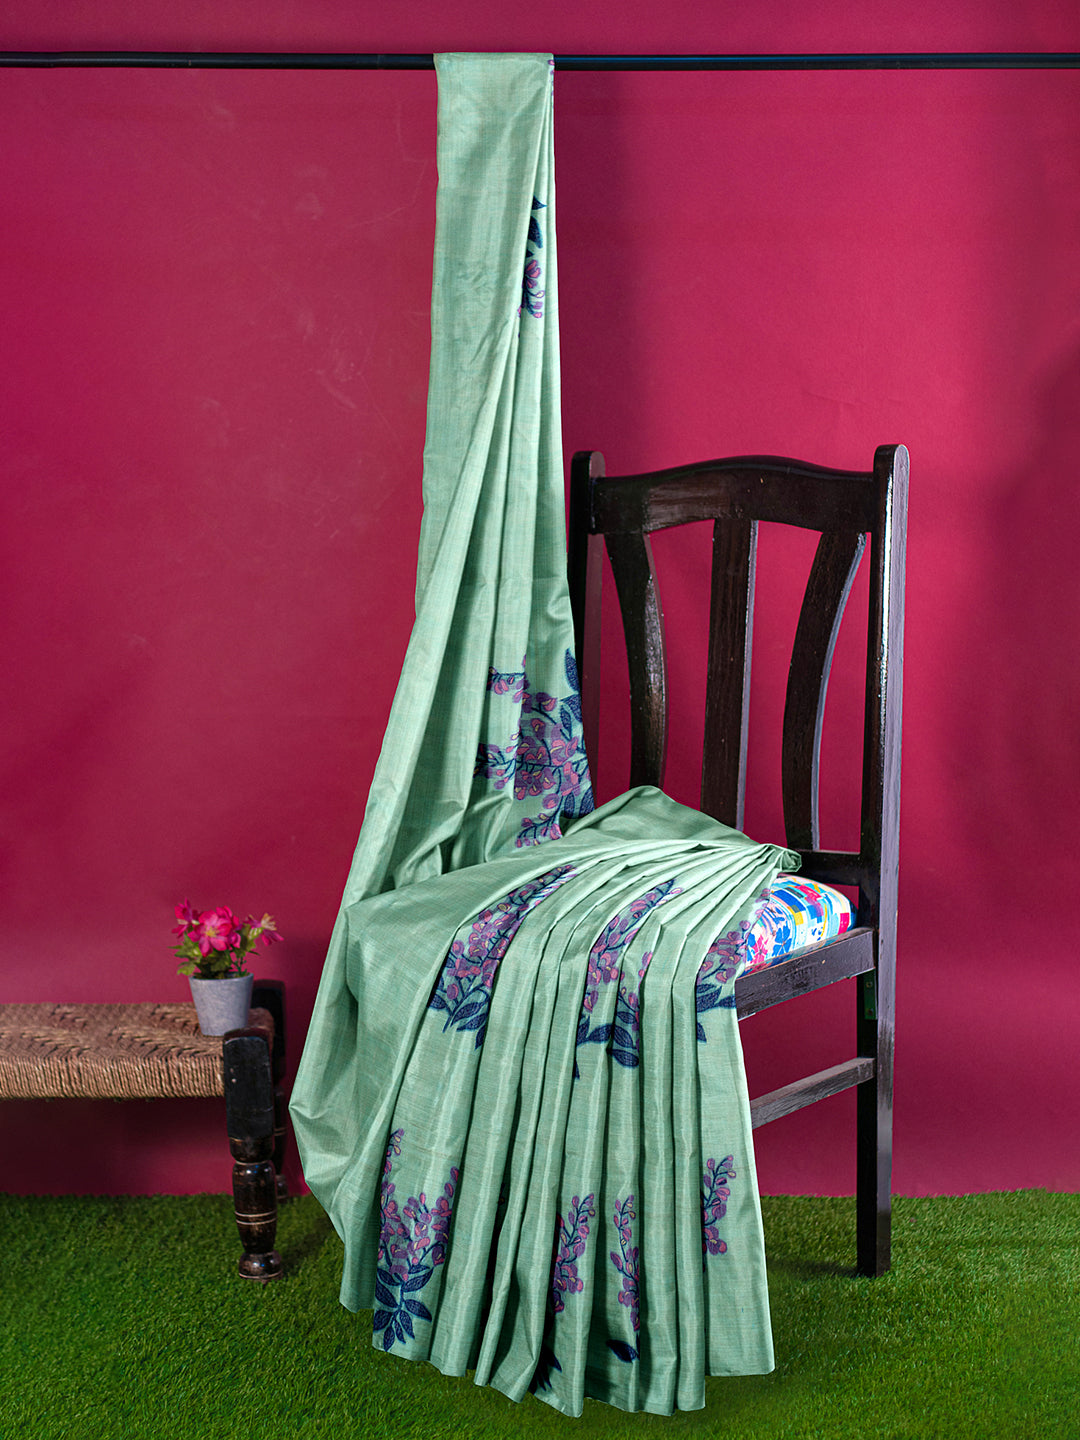 Women Gorgeous Green Semi Raw Silk Weaving Saree - SRS33